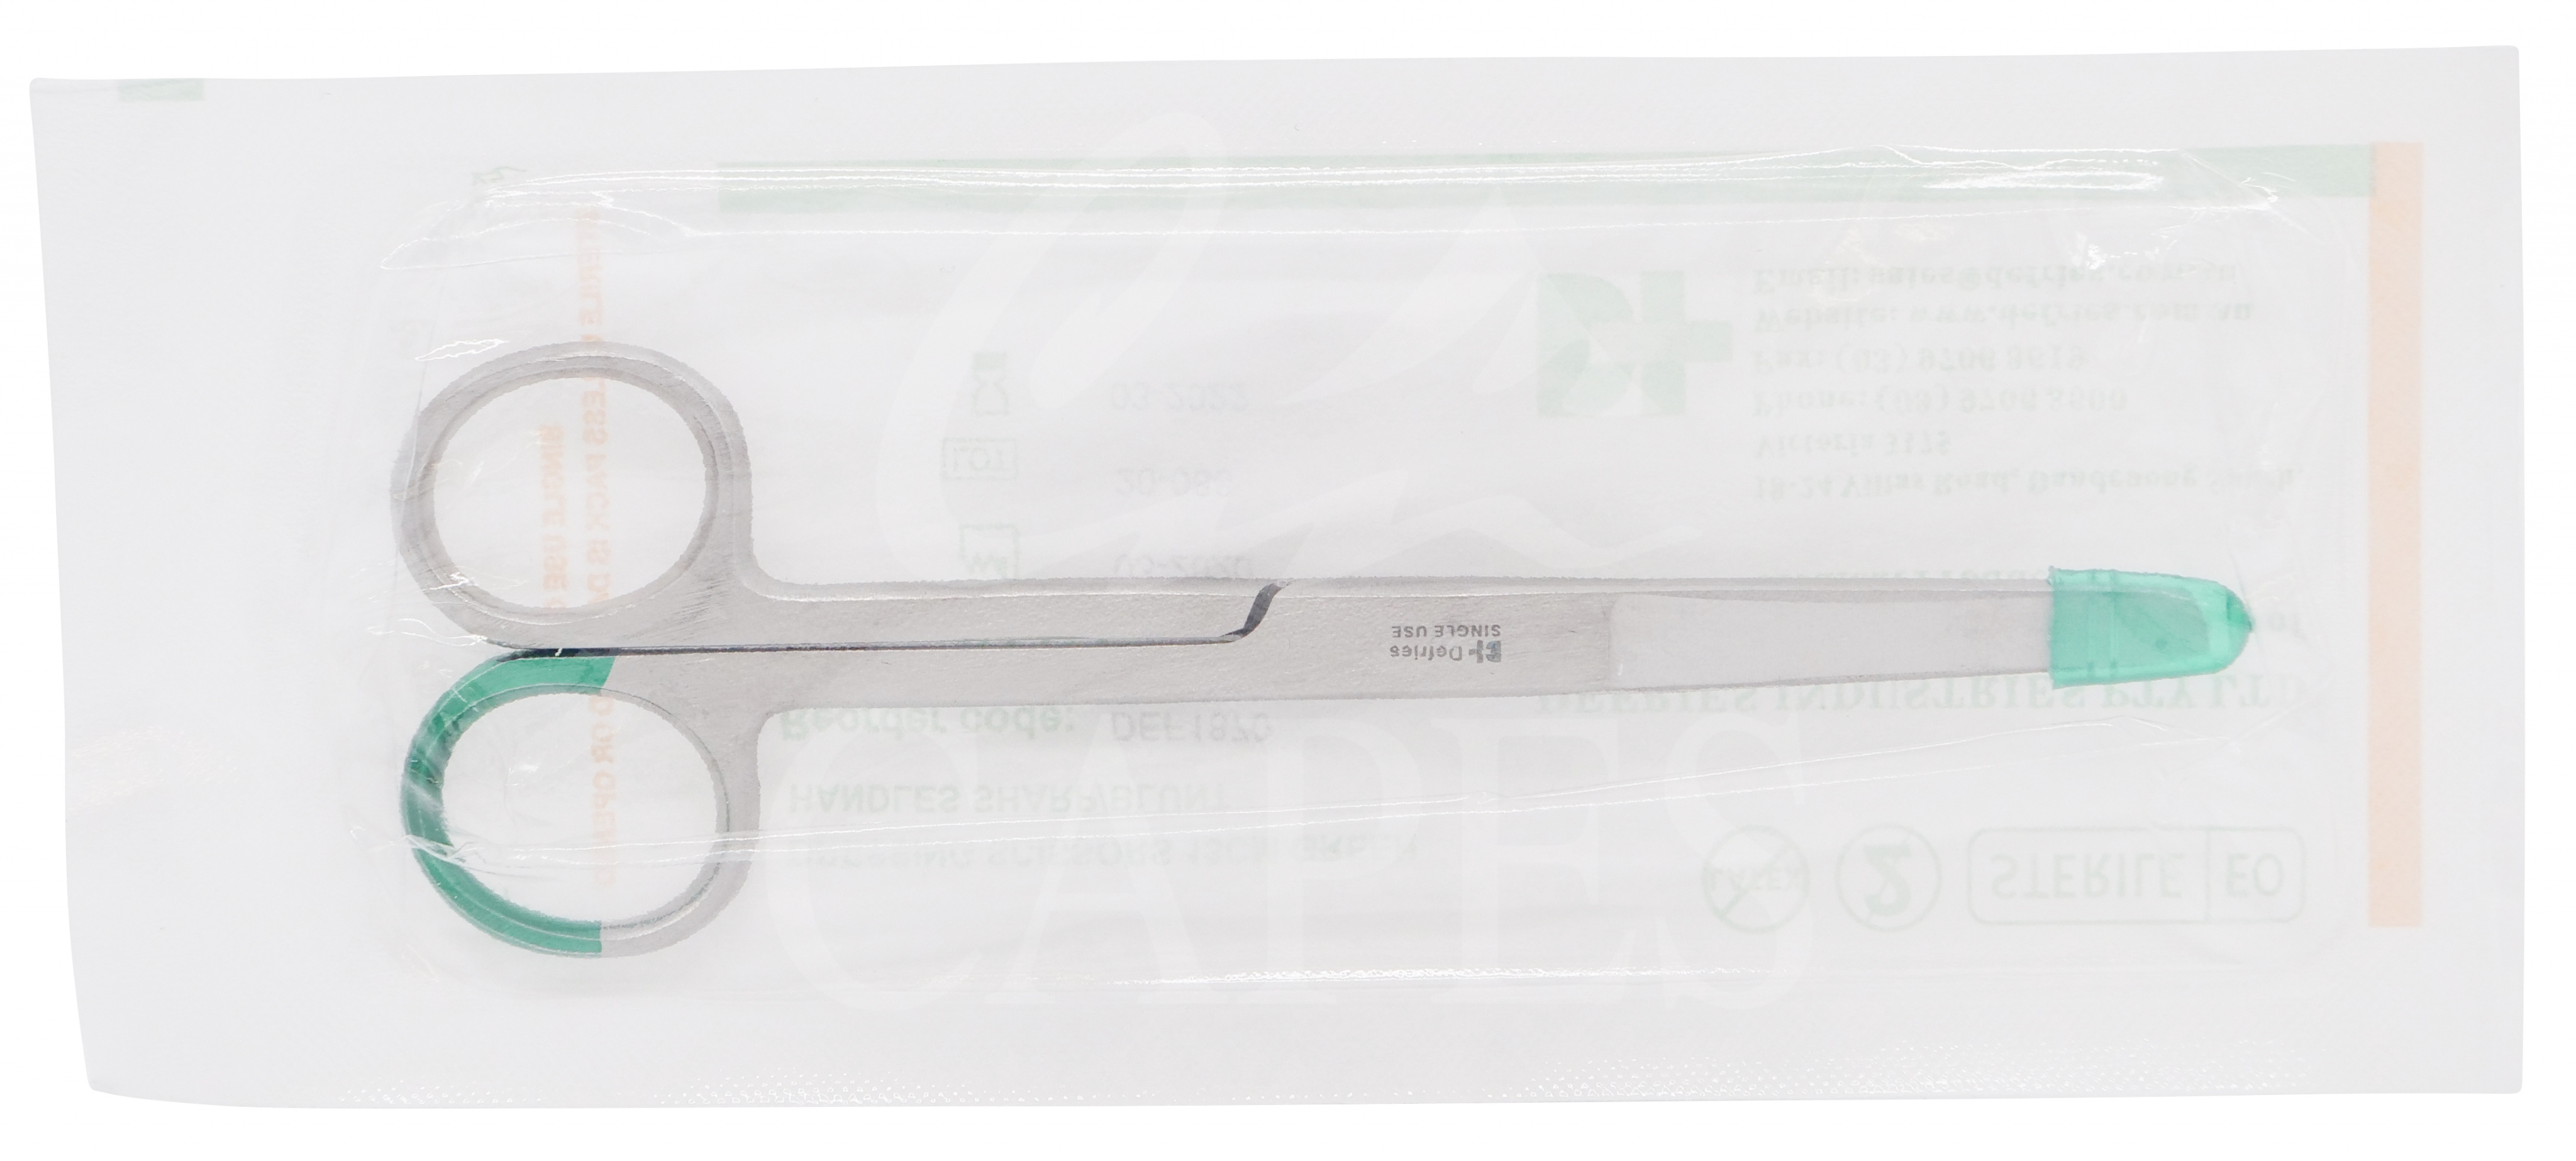 Defries Scissor Dressing STERILE 12.5cm Sharp Blunt Green handle image 1